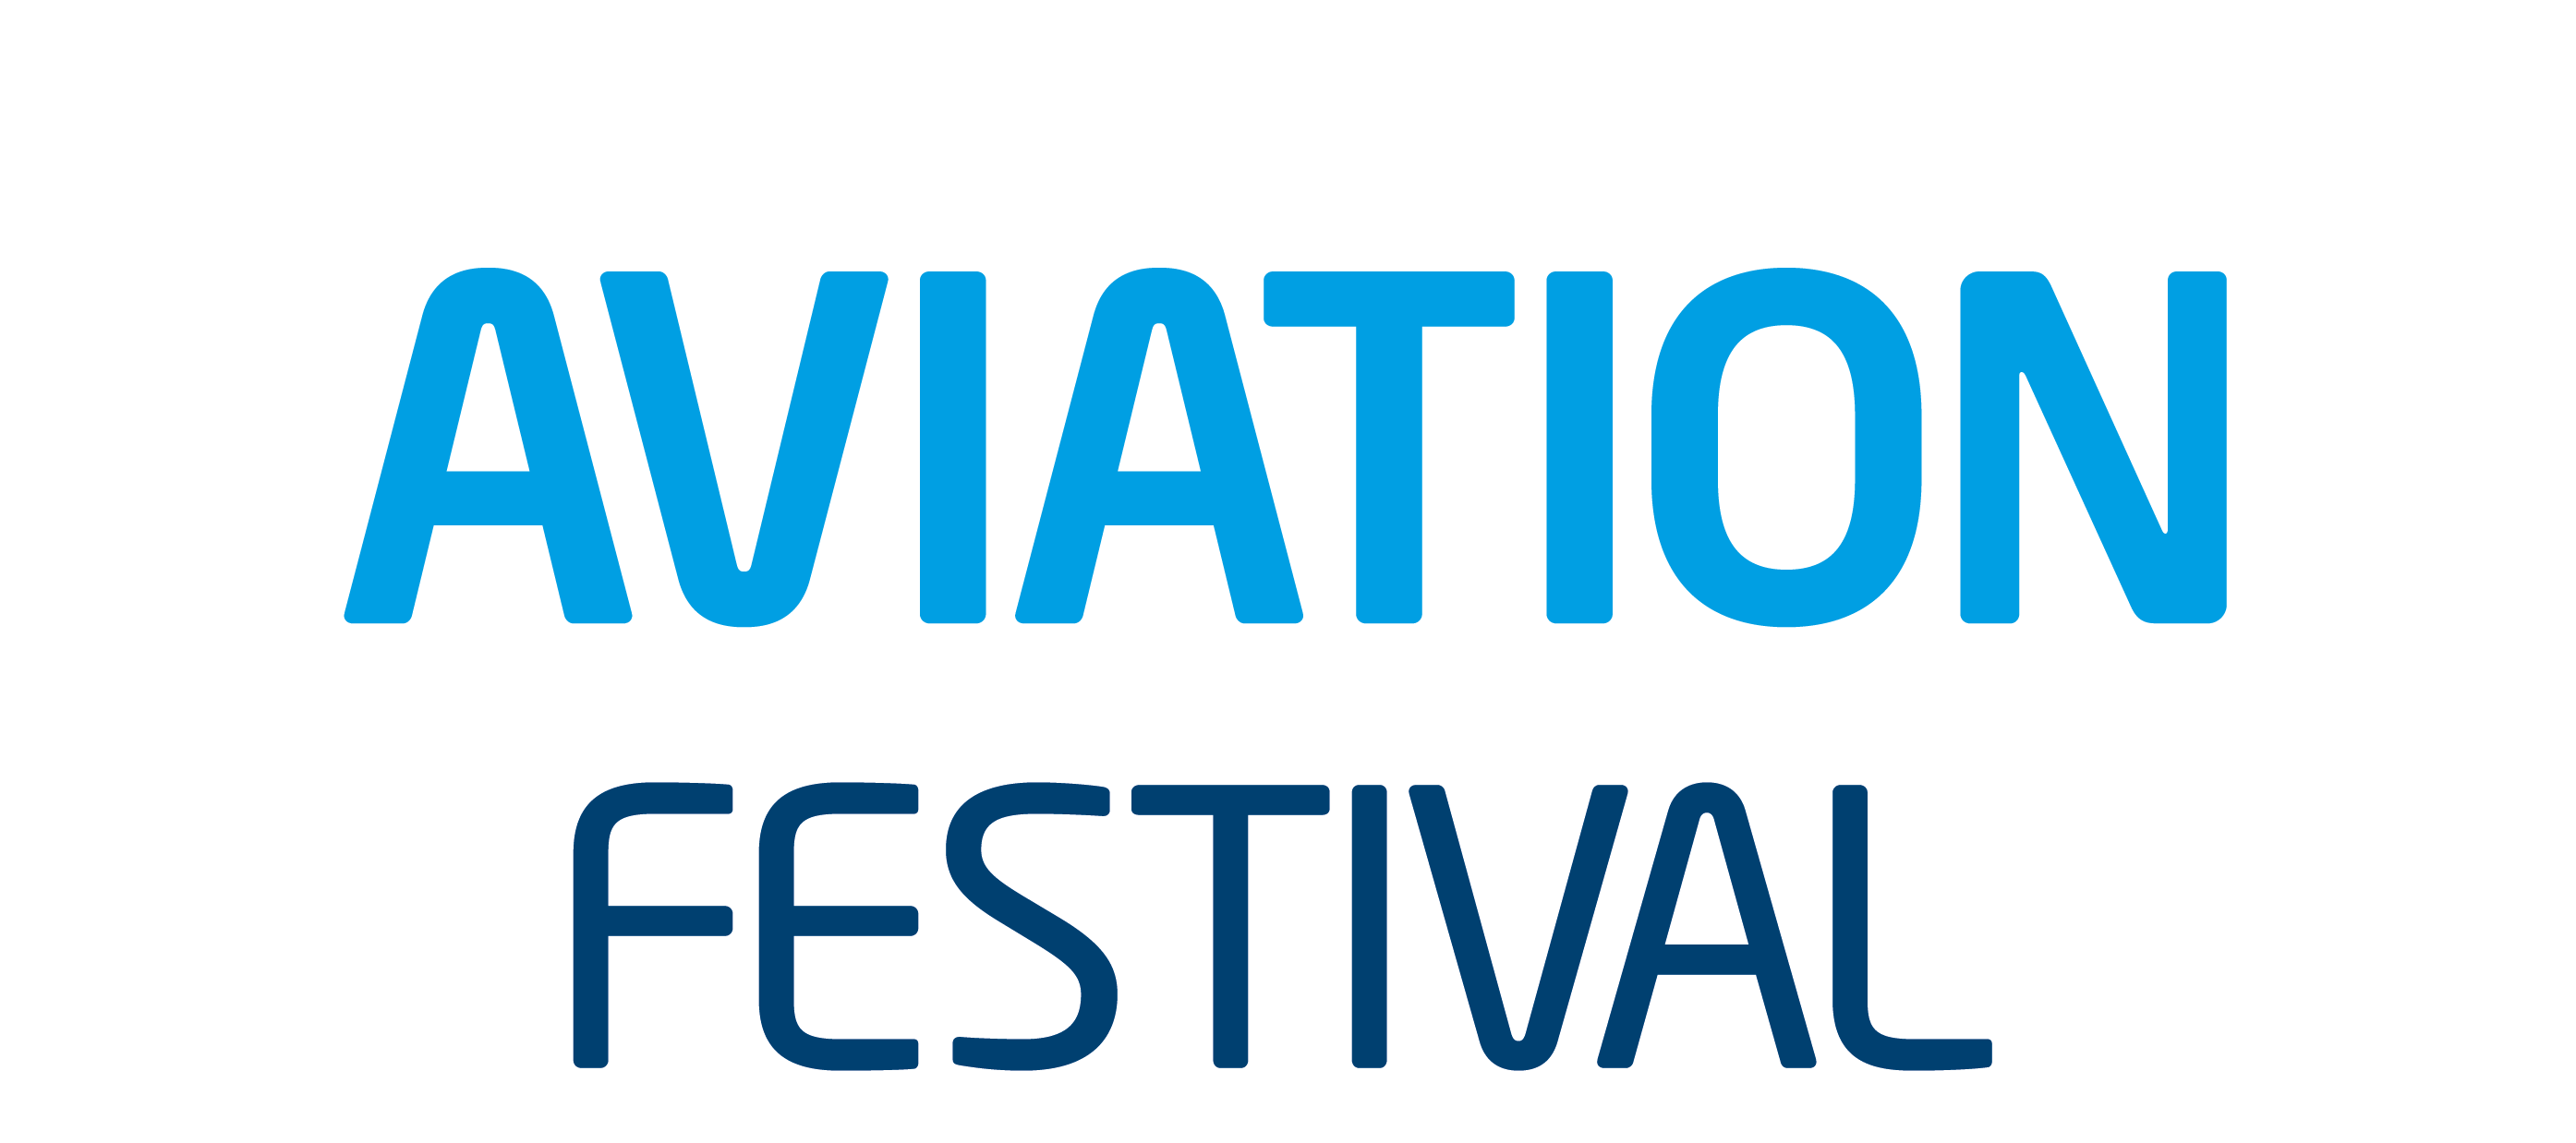 World Aviation Festival - Visit Lisbon